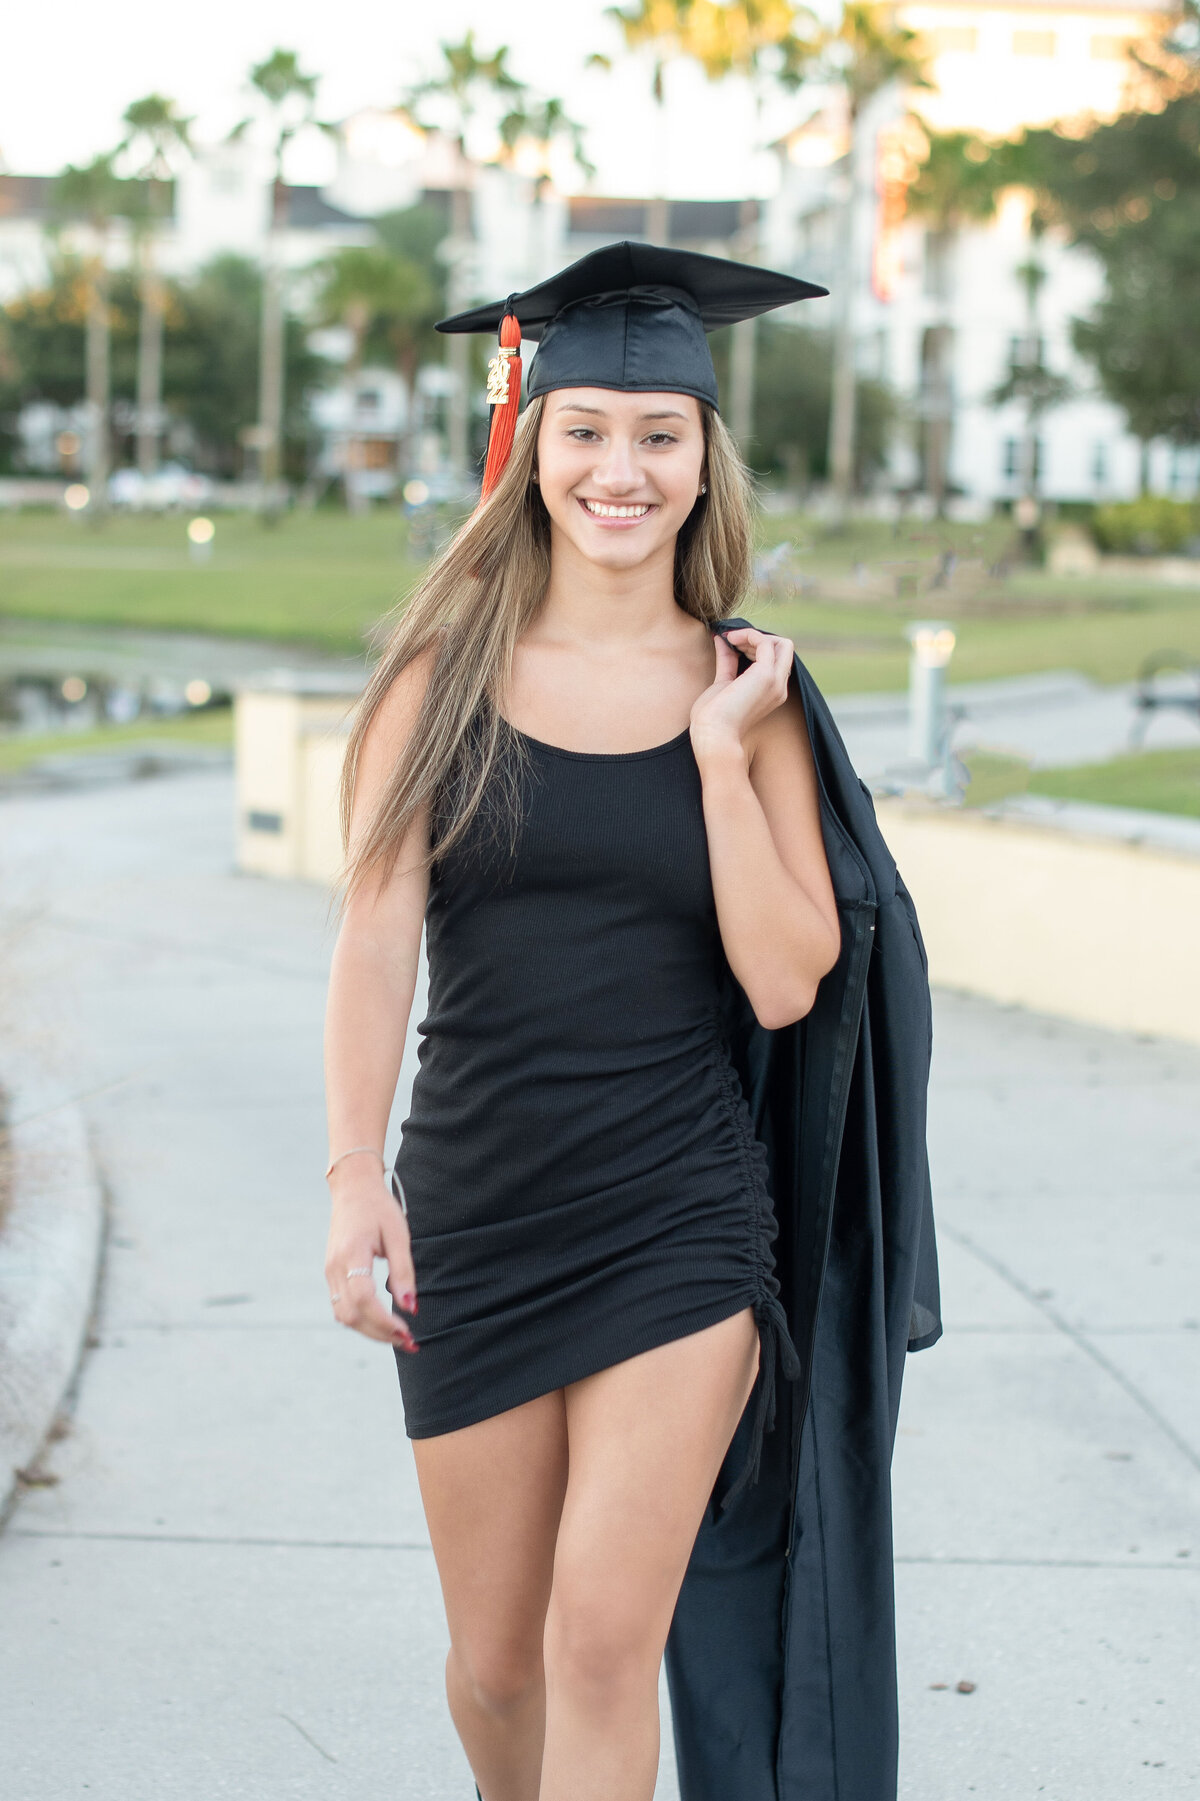 High school senior girl wearing cap walks holding gown over her shoulder.